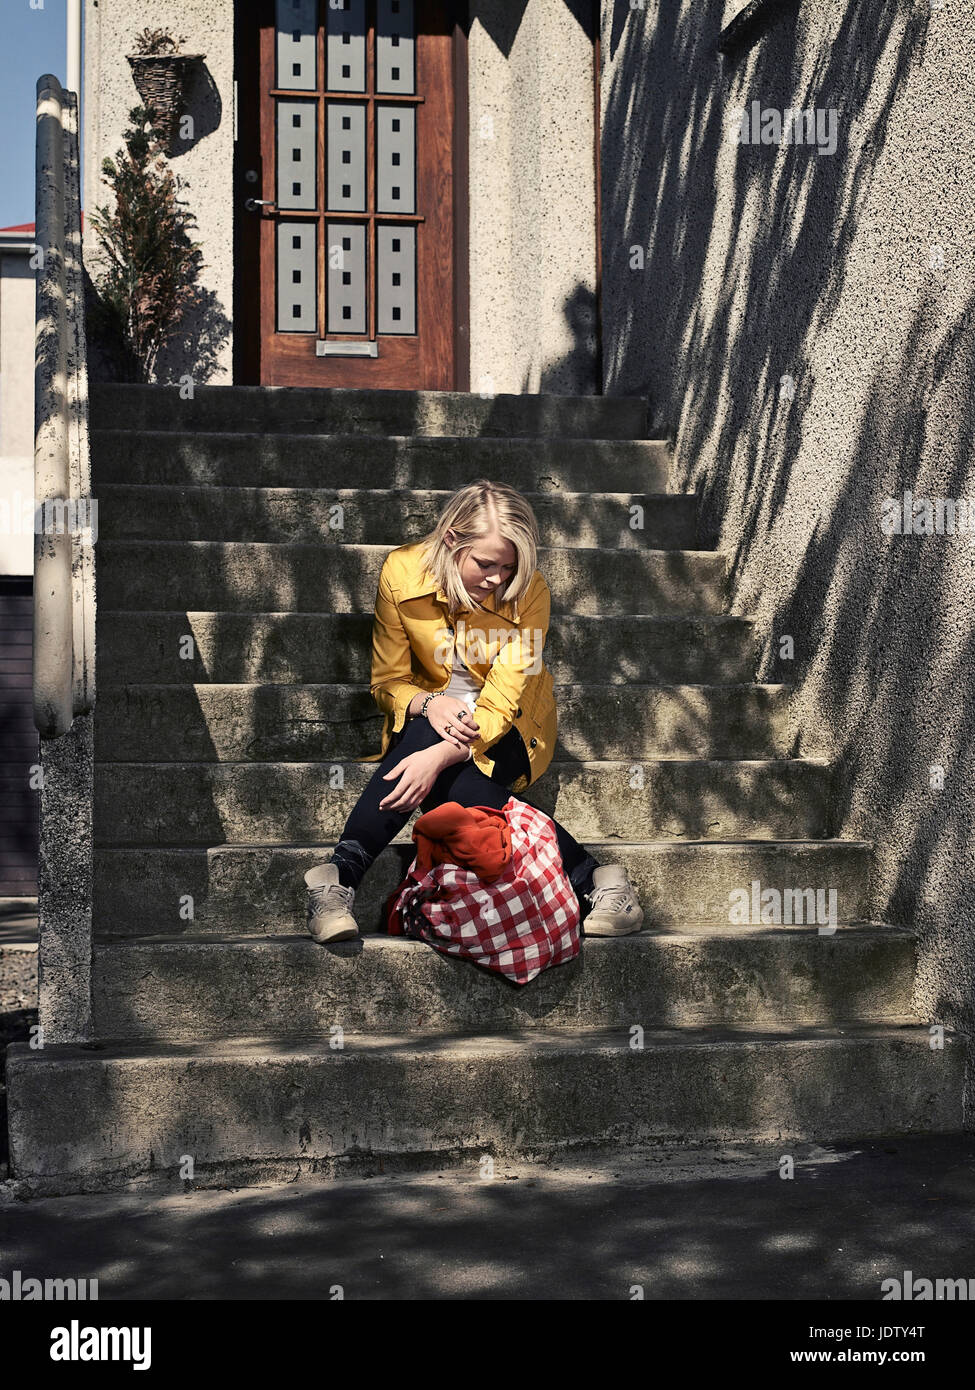 Sad girl sitting on steps Stock Photo - Alamy